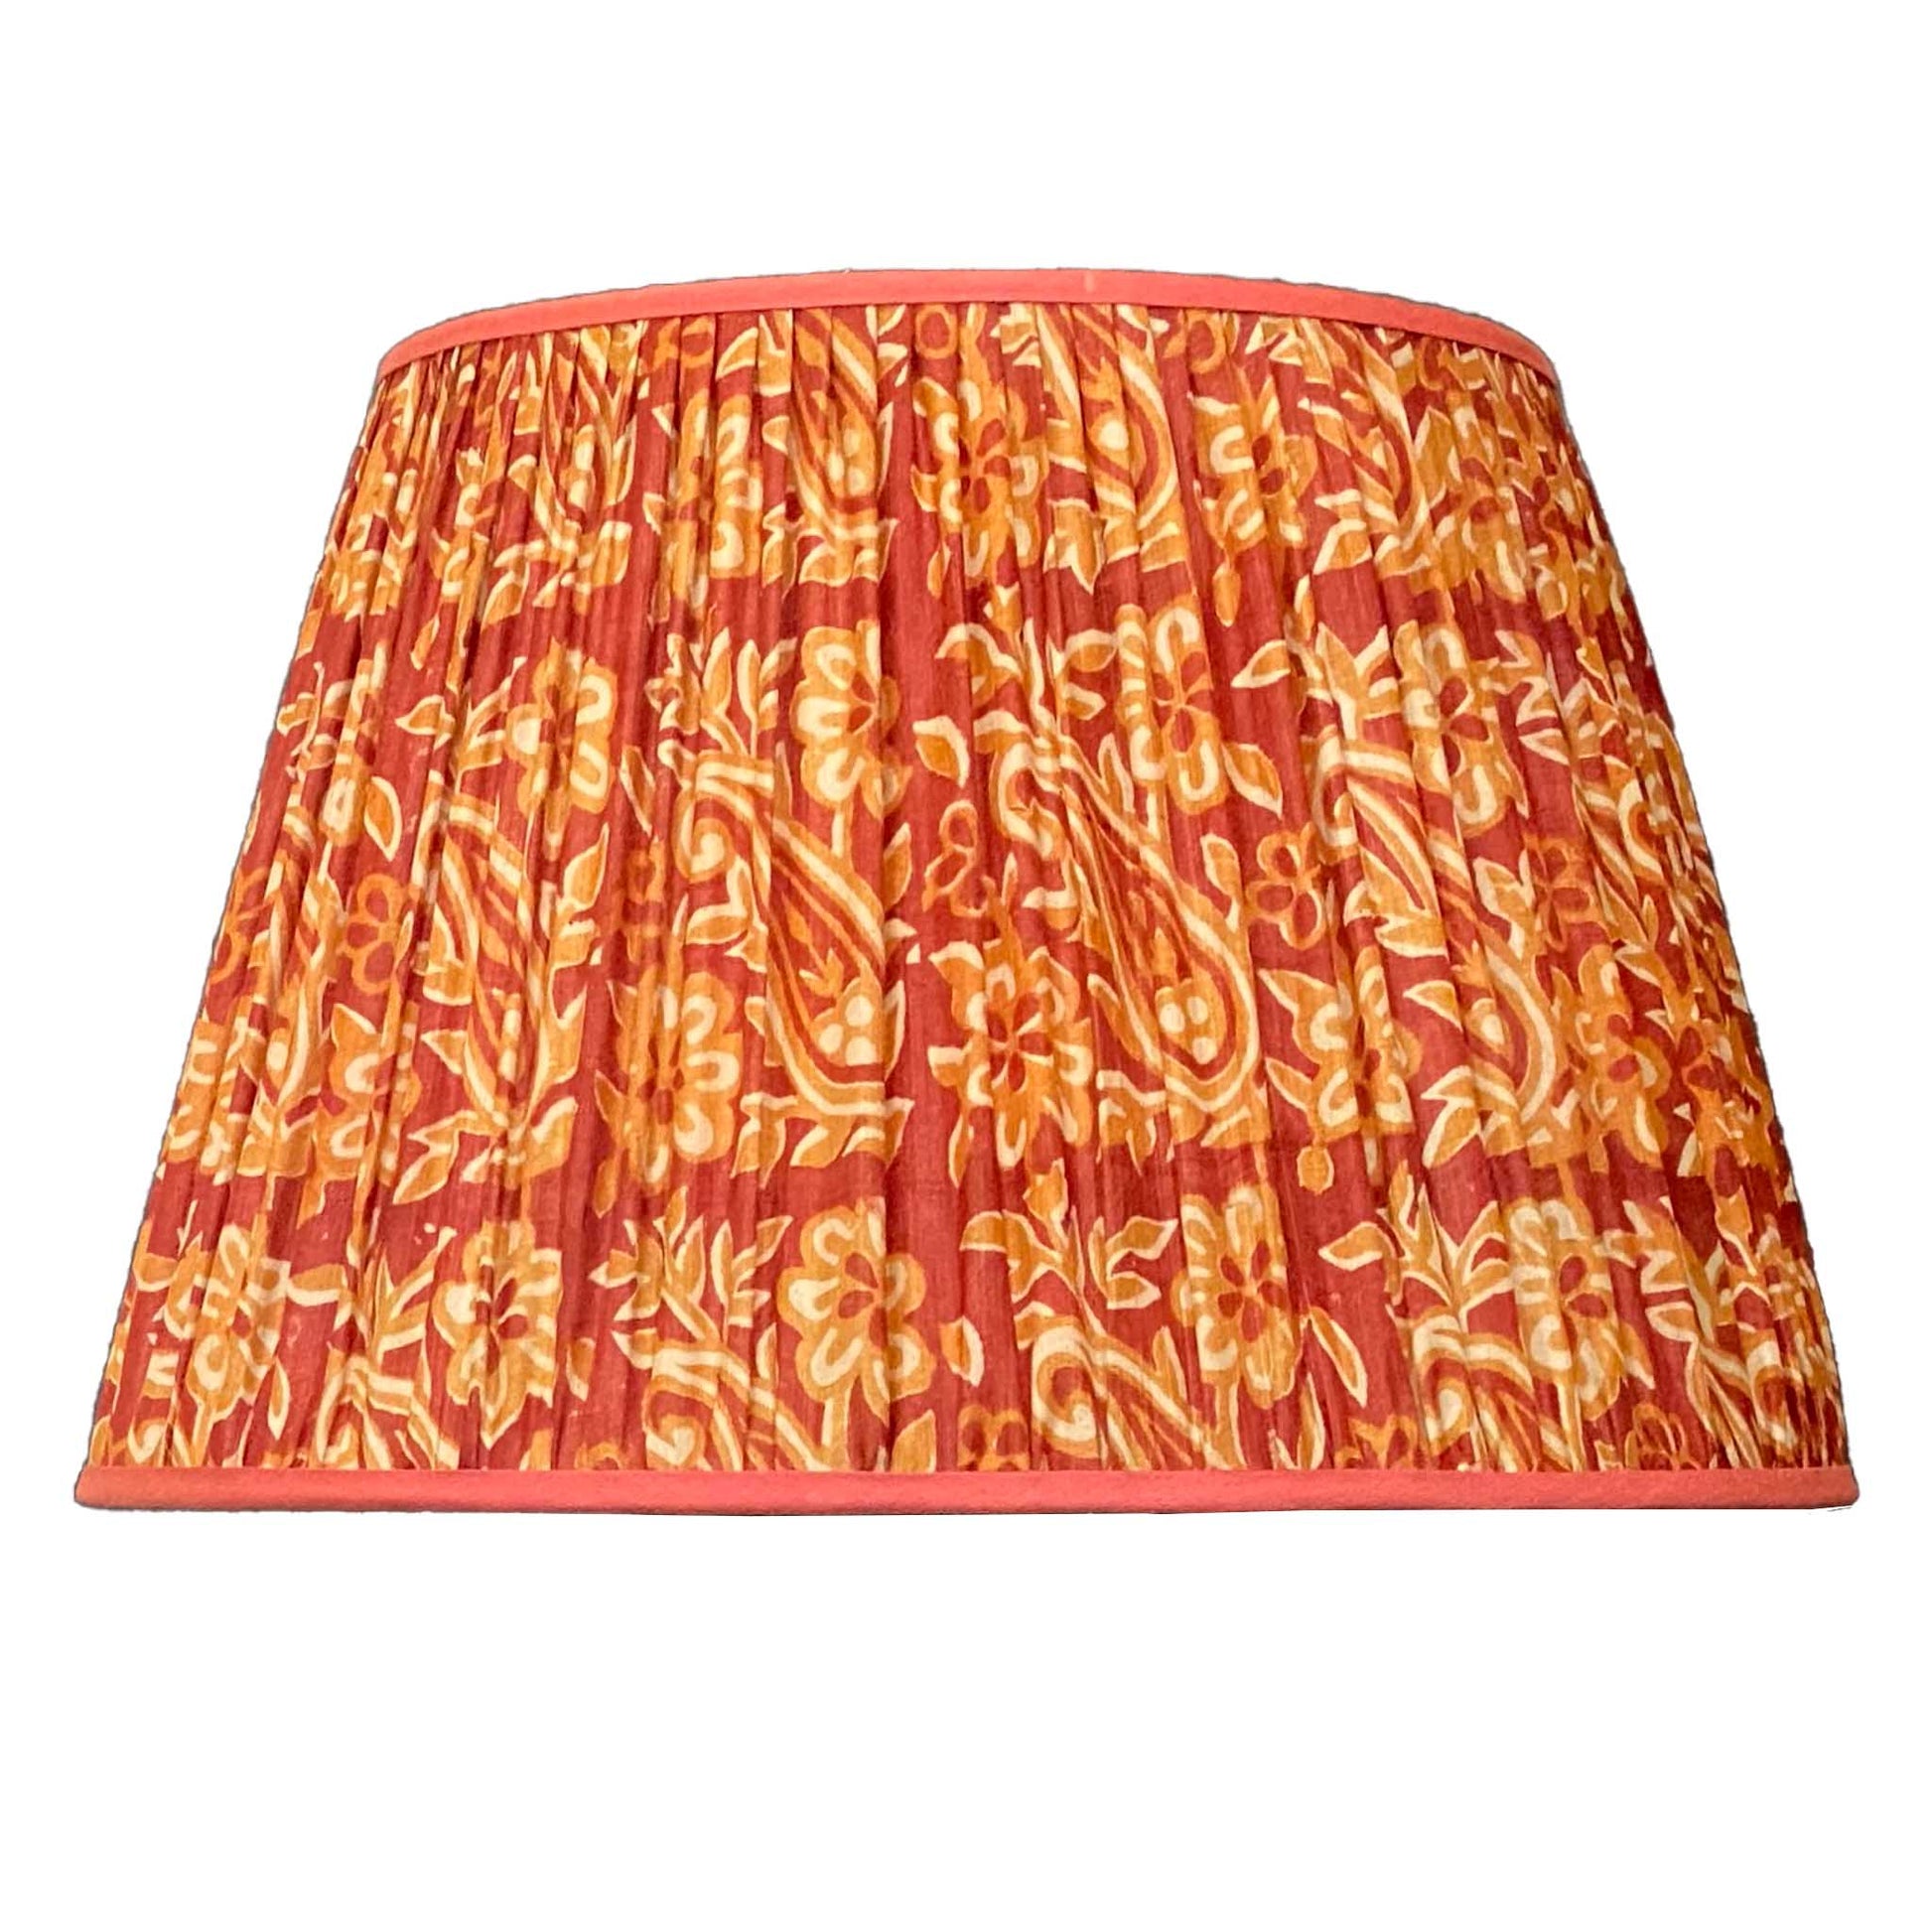 Russet and ochre vintage silk sari lampshade cutout